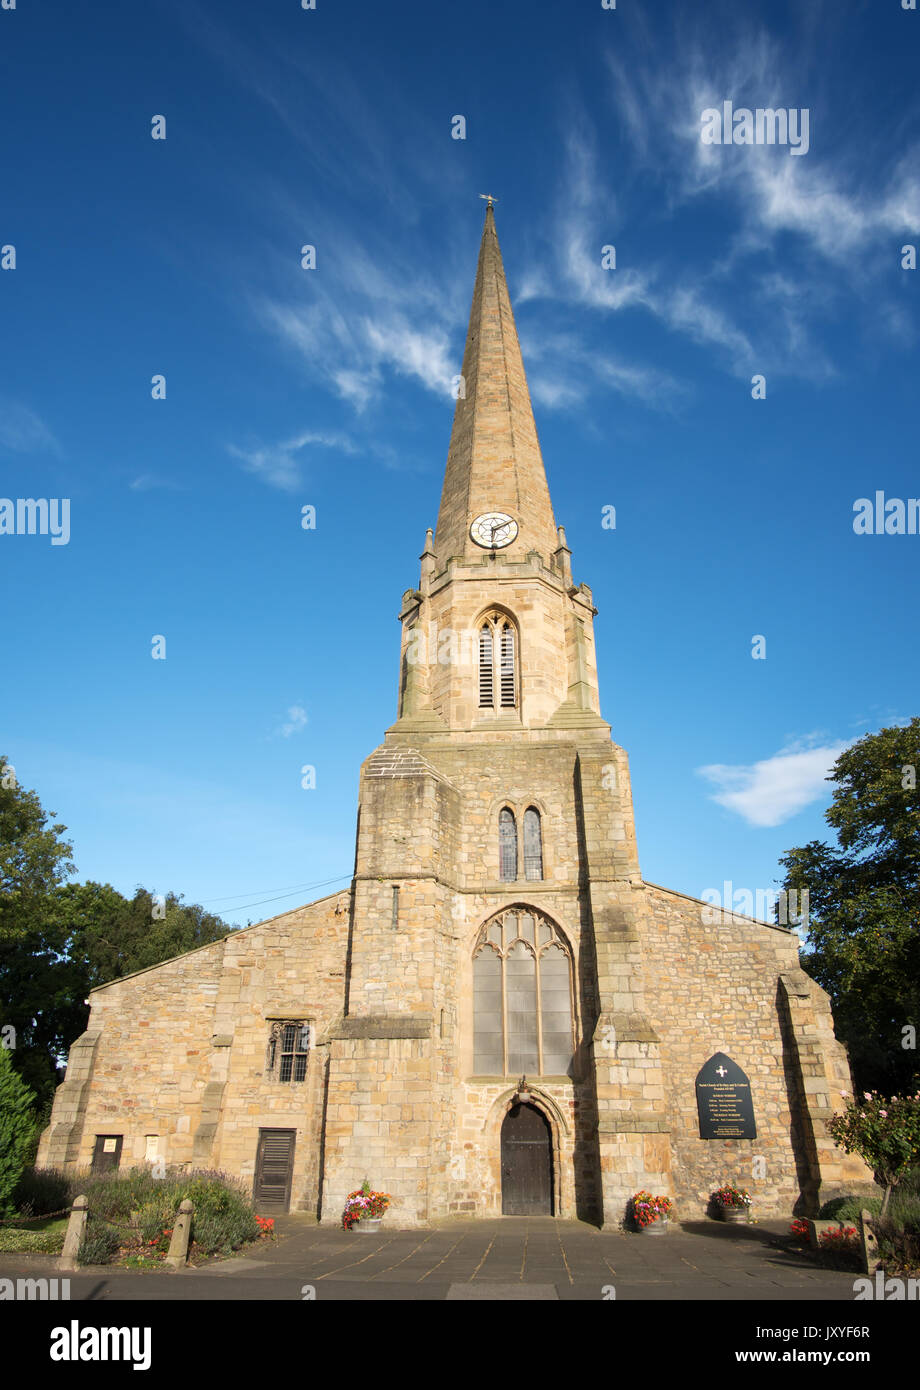 Eglise St Mary et St Cuthbert, Dormagen, England, UK Banque D'Images